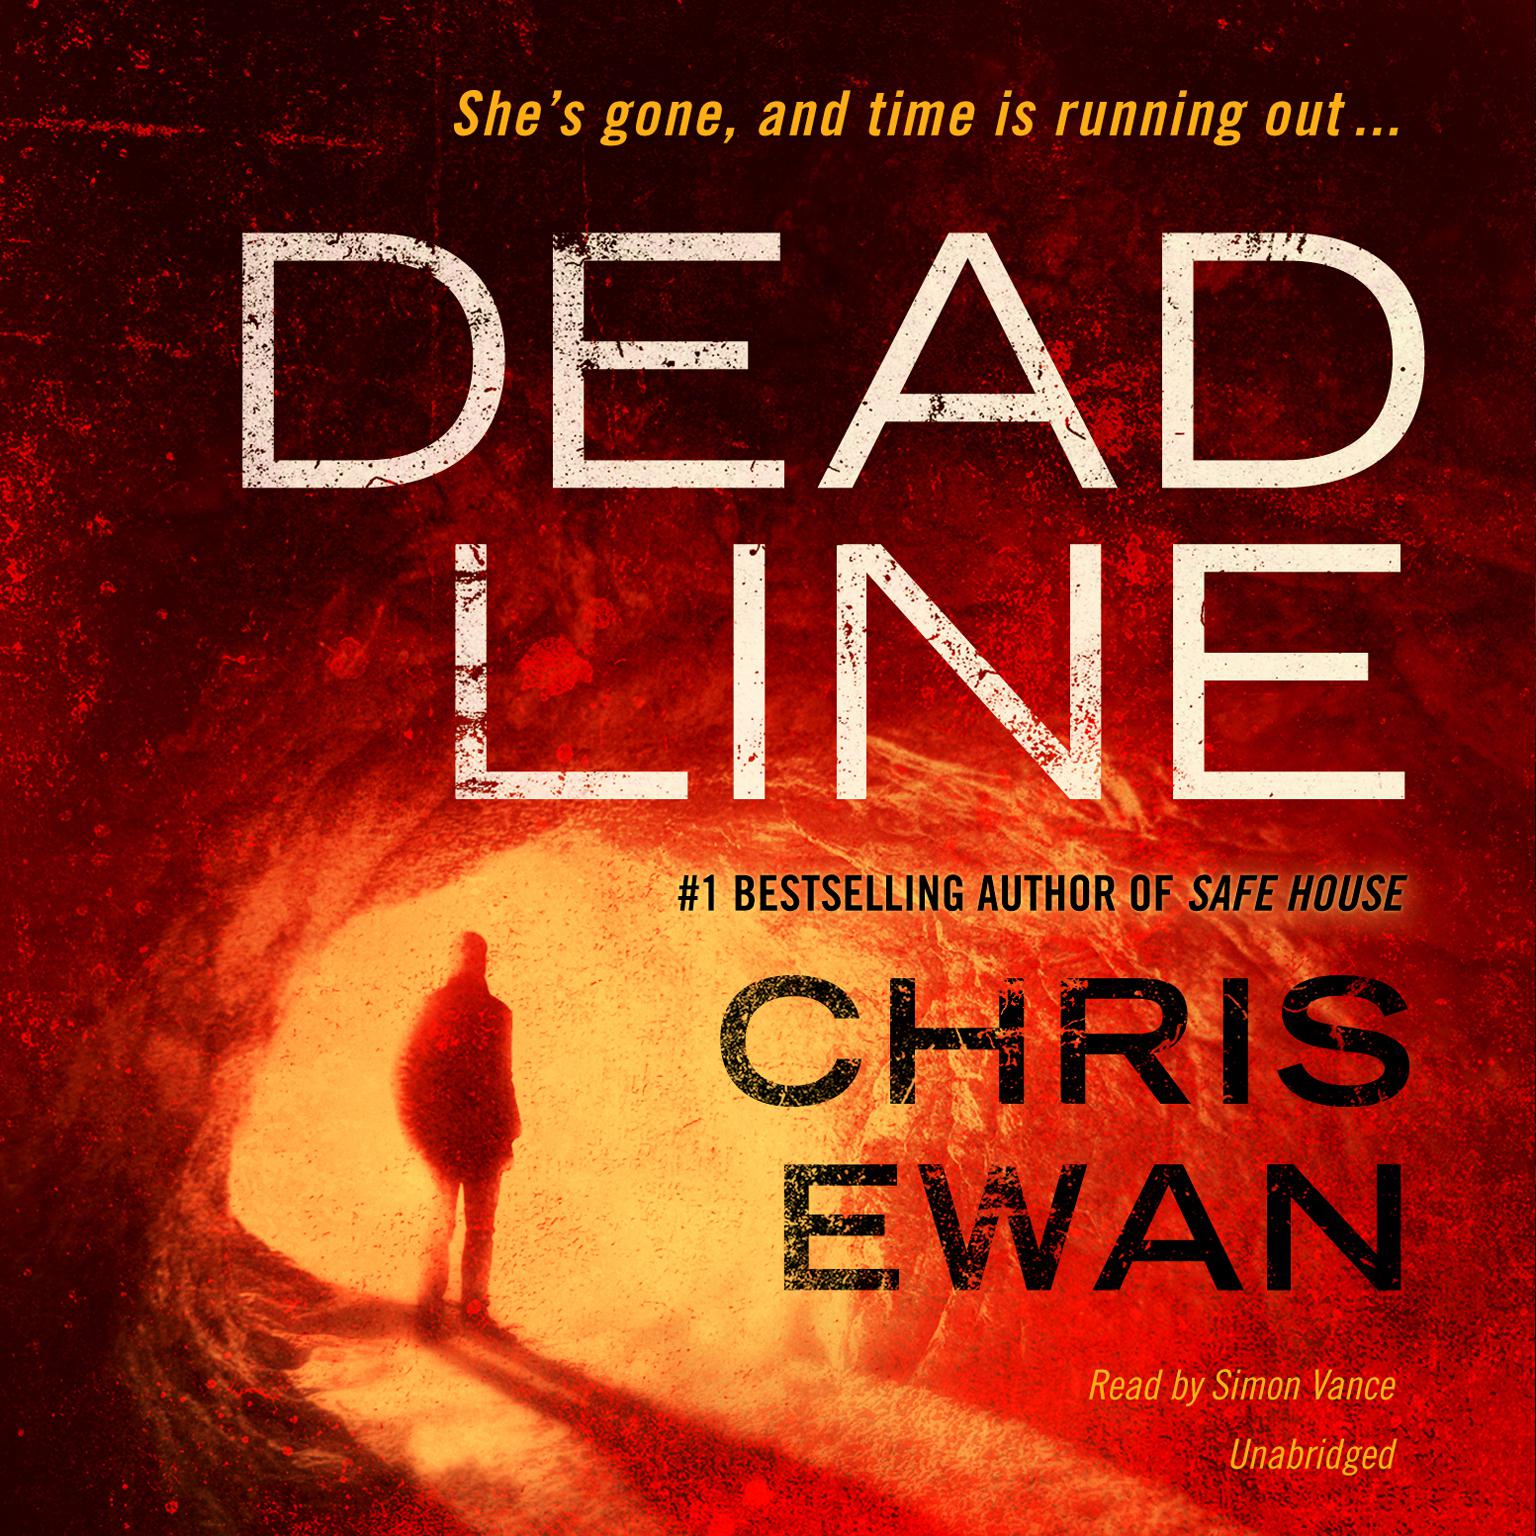 Dead Line Audiobook, by Chris Ewan